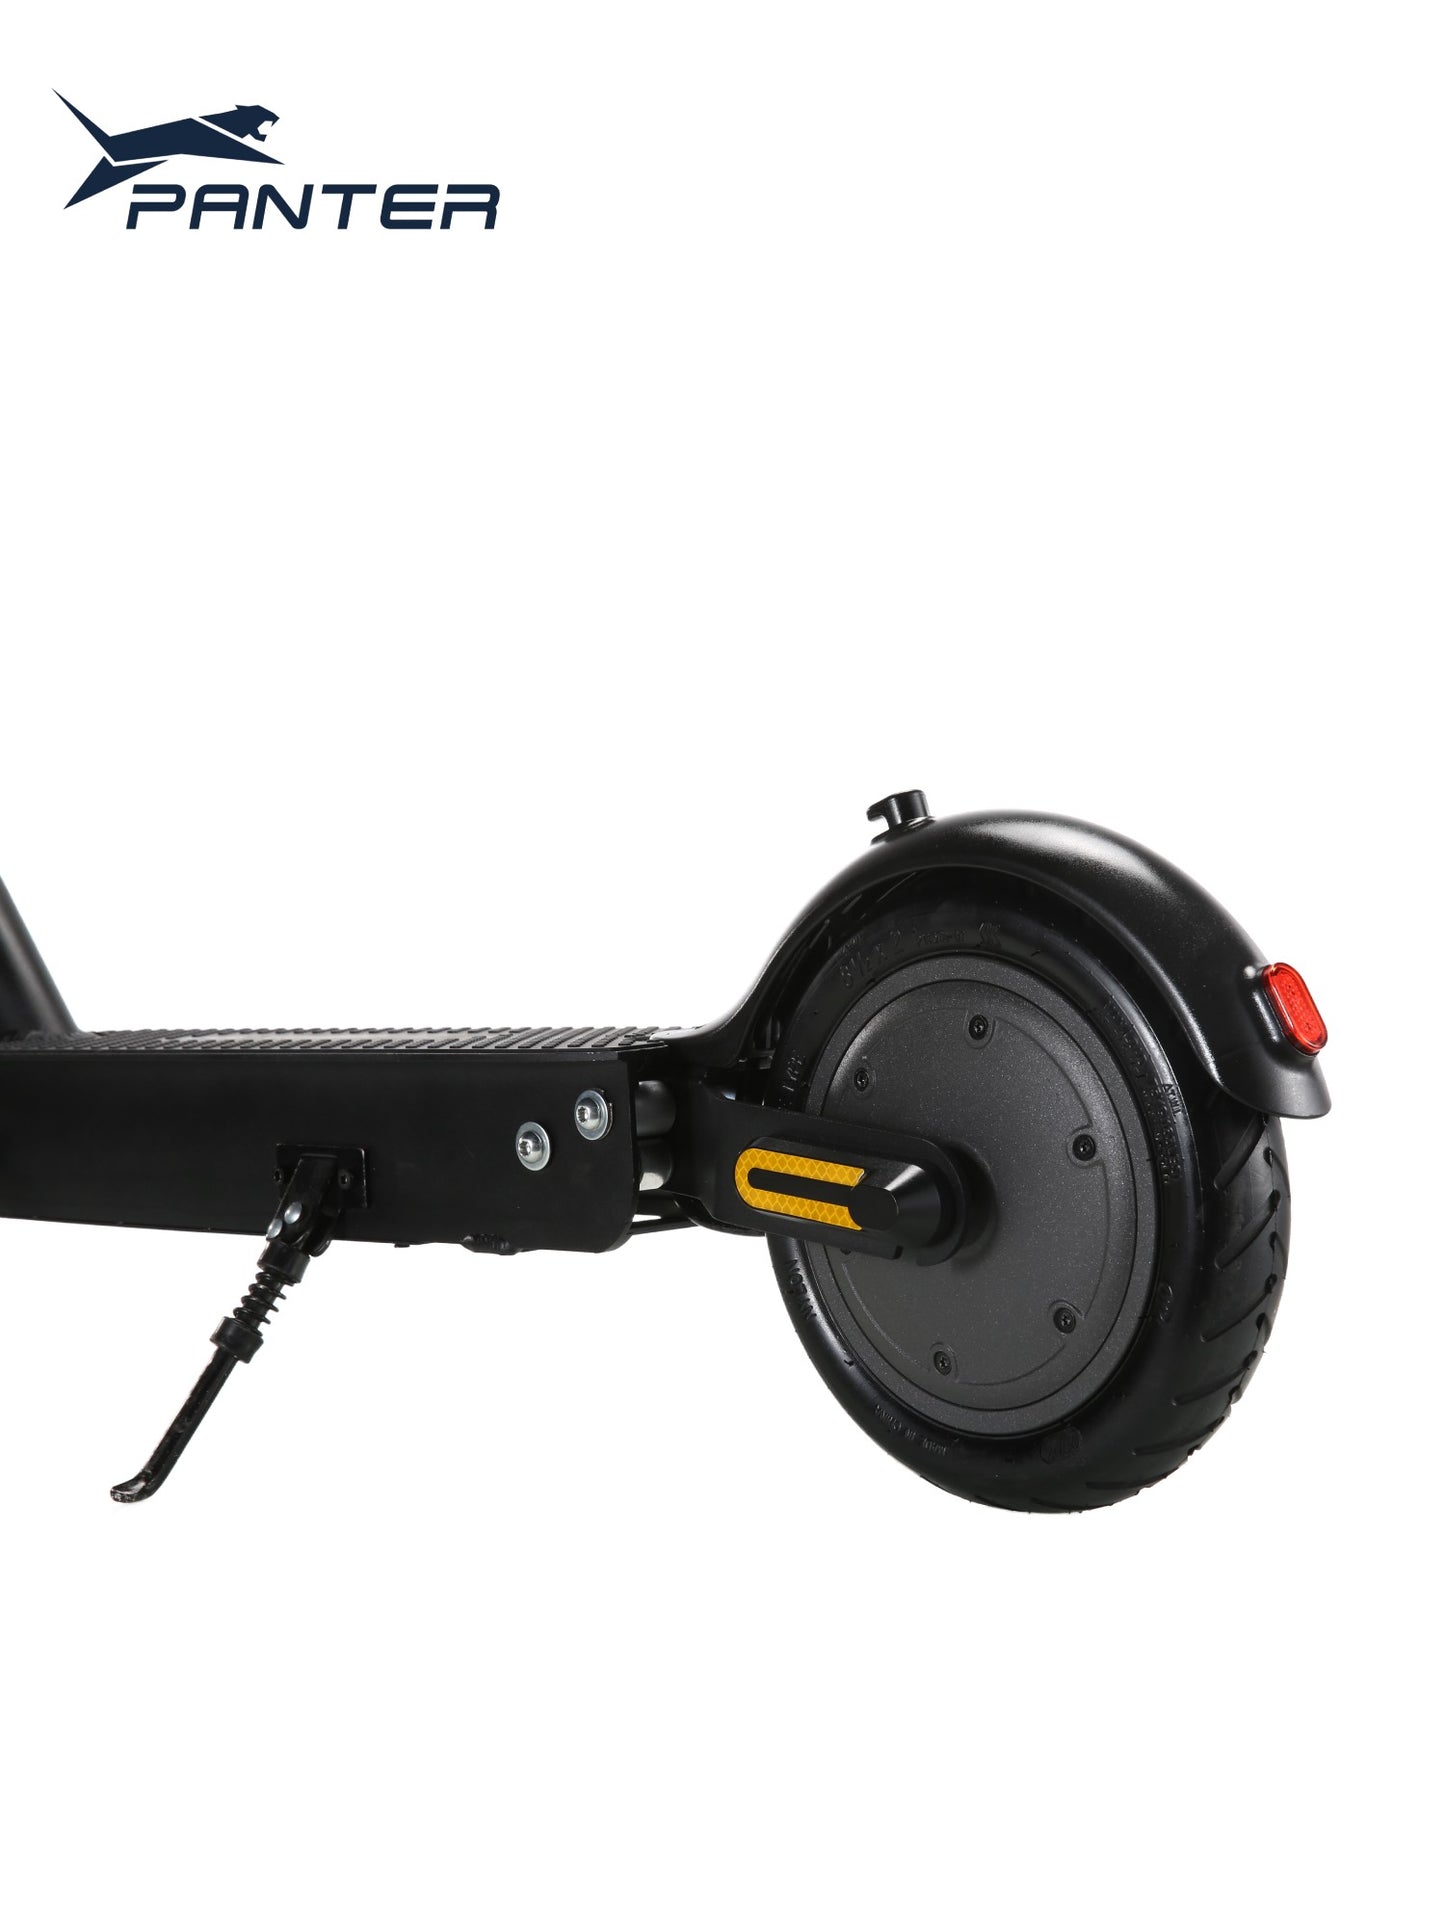 Forhåndssalg Panter Icon Pro - lovlig el-sparkesykkel